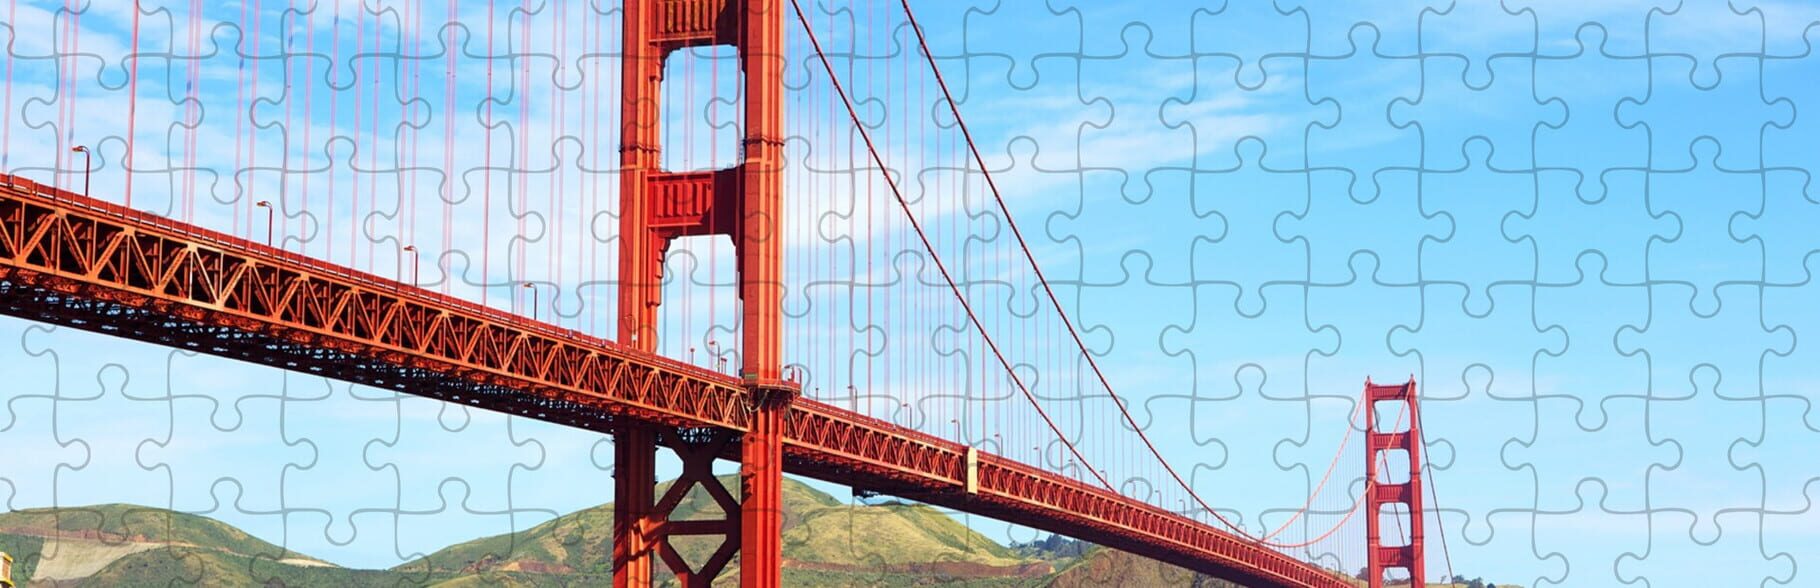 Arte - Jigsaw Puzzle World